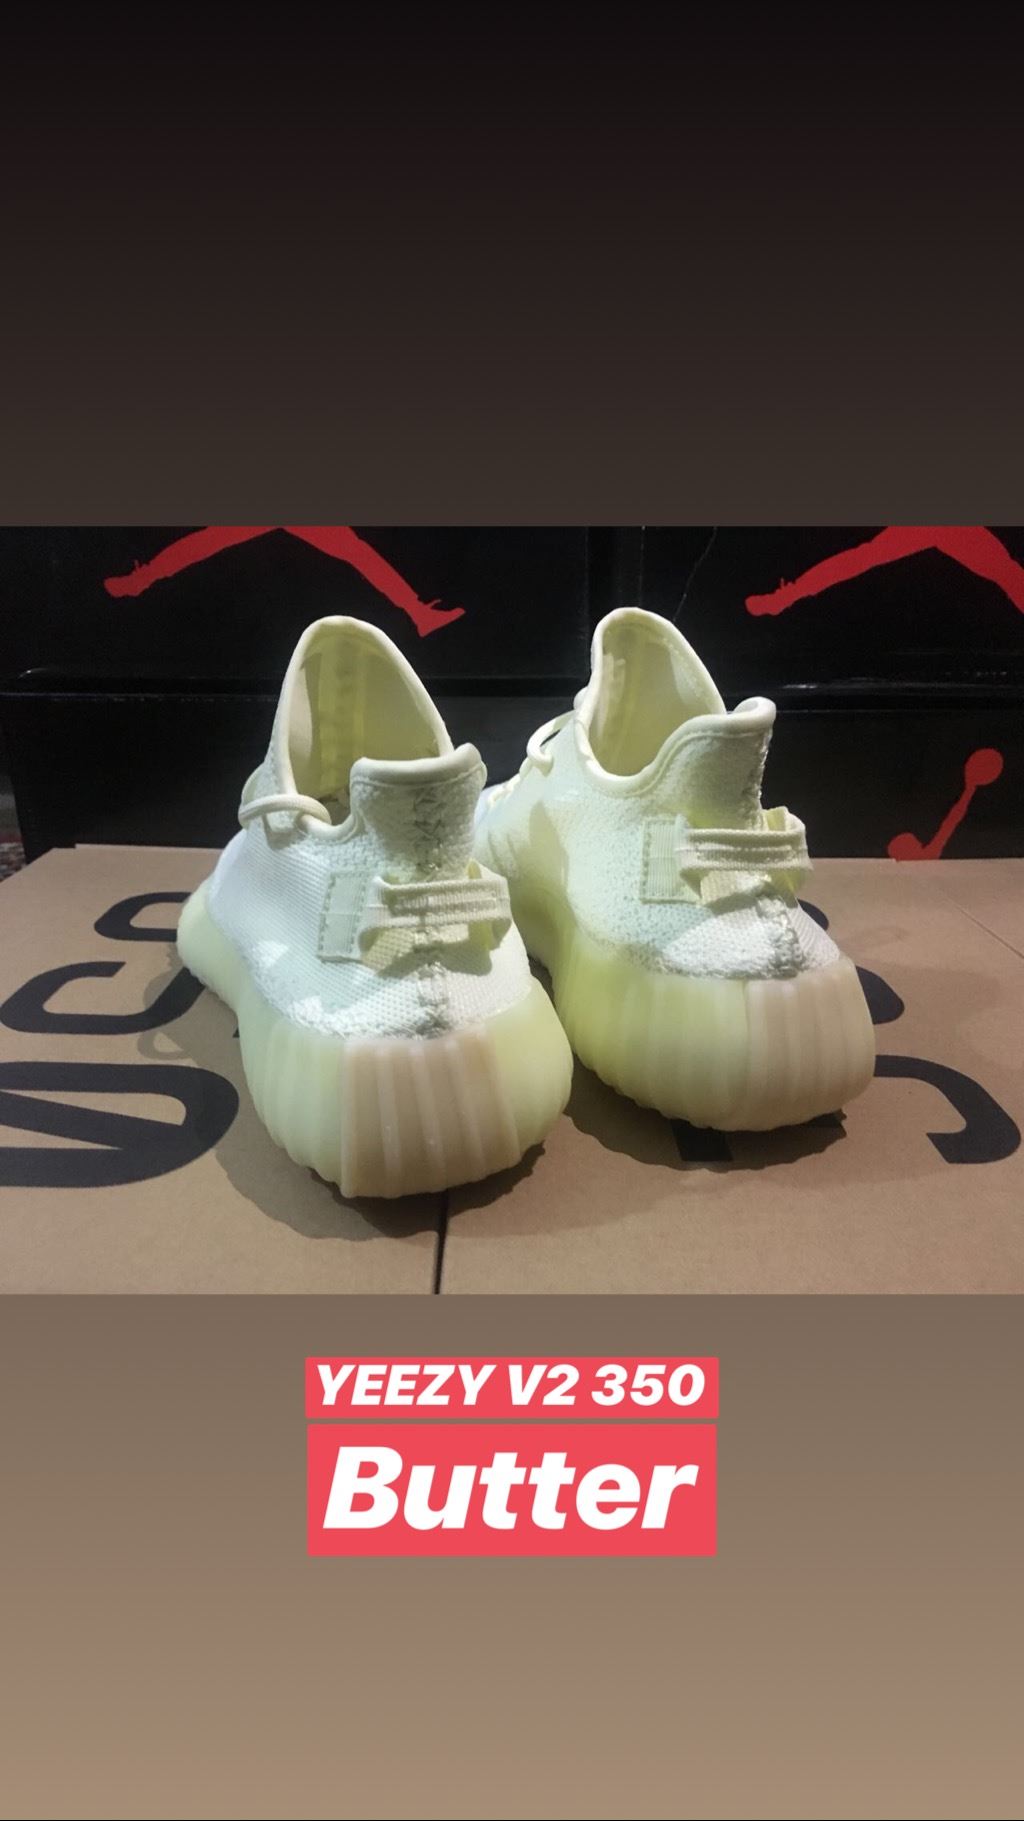 Adidas Yeezy 350 V2 (Butter)